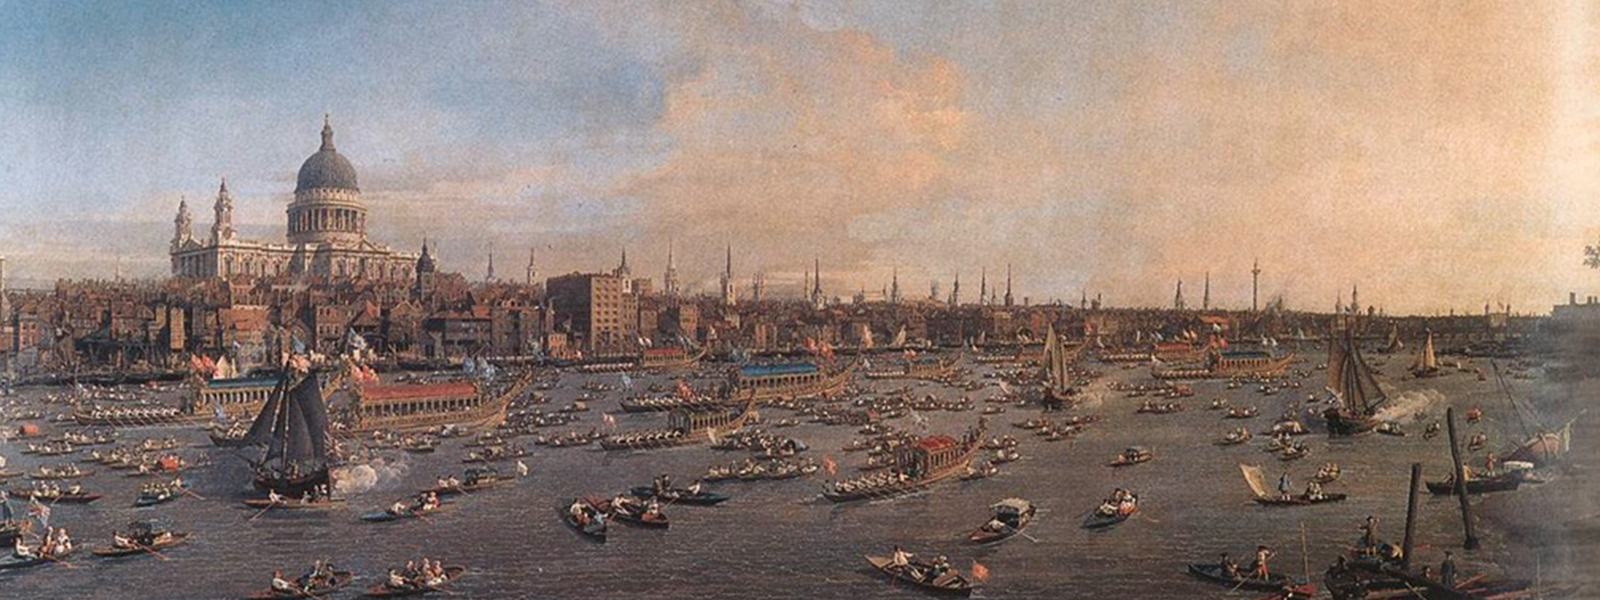 Англия начала 17 века. Лондон в 17 веке. Лондон 17 века река Темза. Лондон 17 века крупный торговый центр. Лондон начала 19 века Темза.